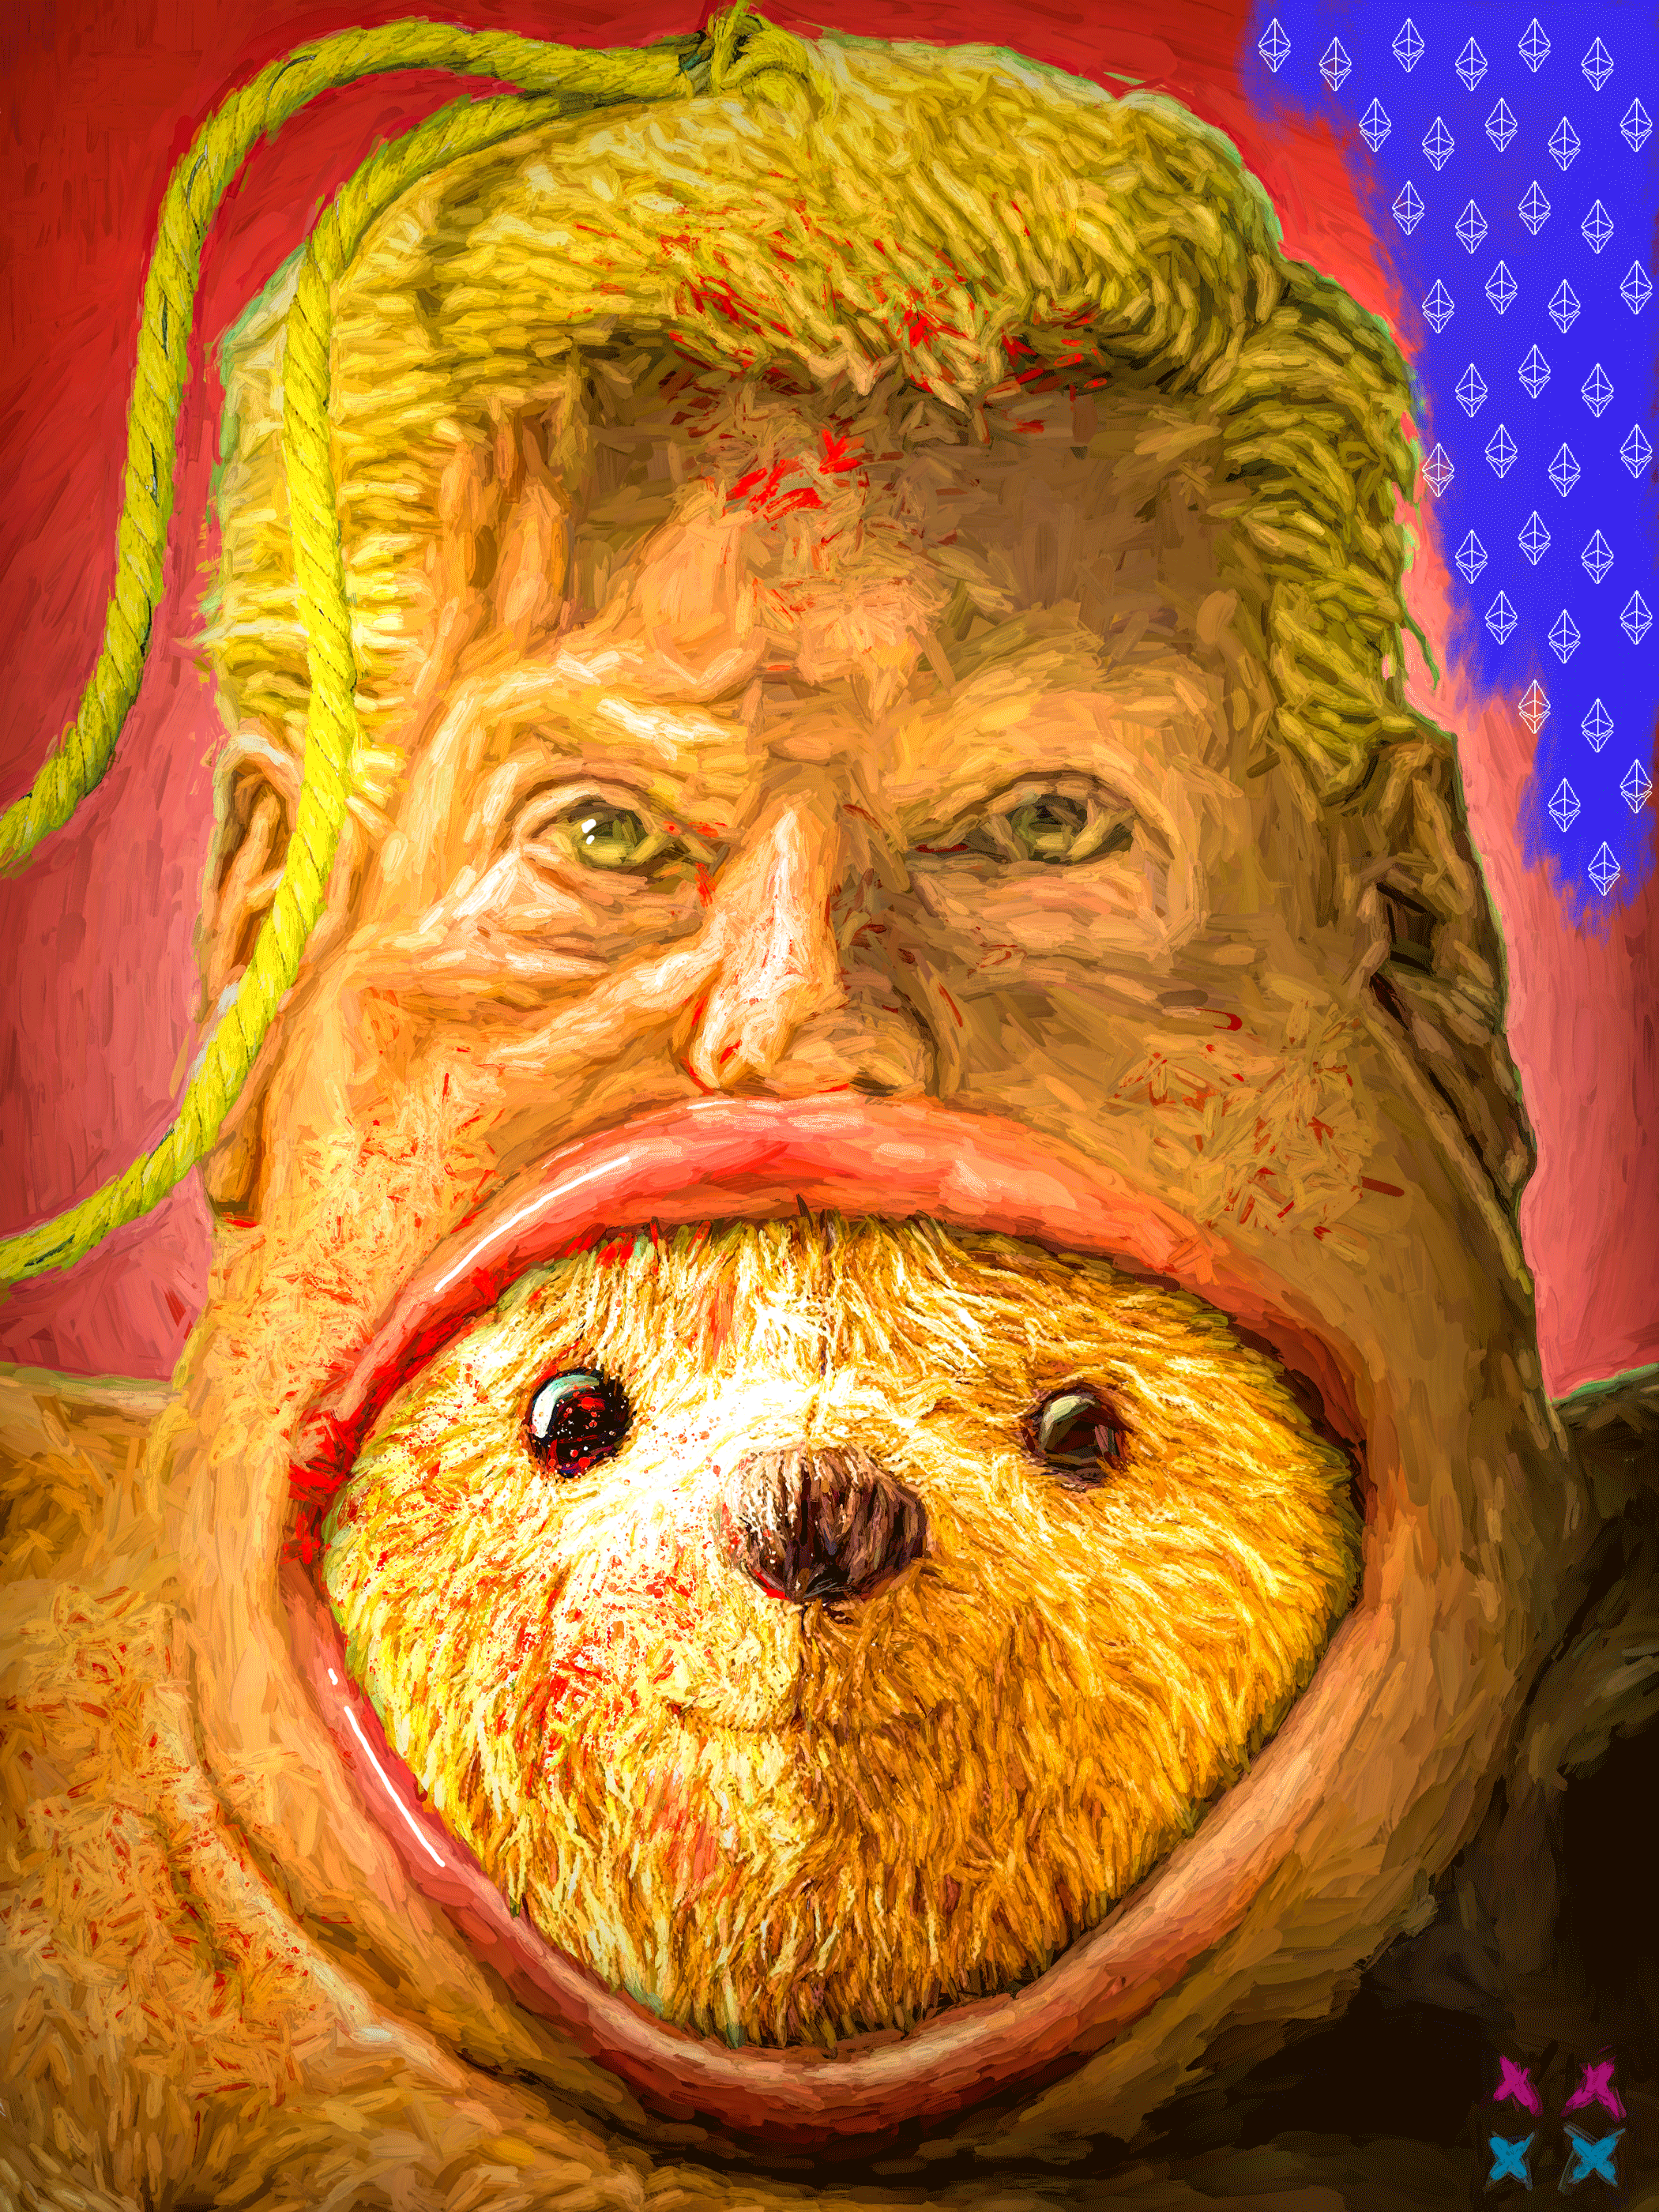 Peek-a-Pooh / Donald Trump Edition